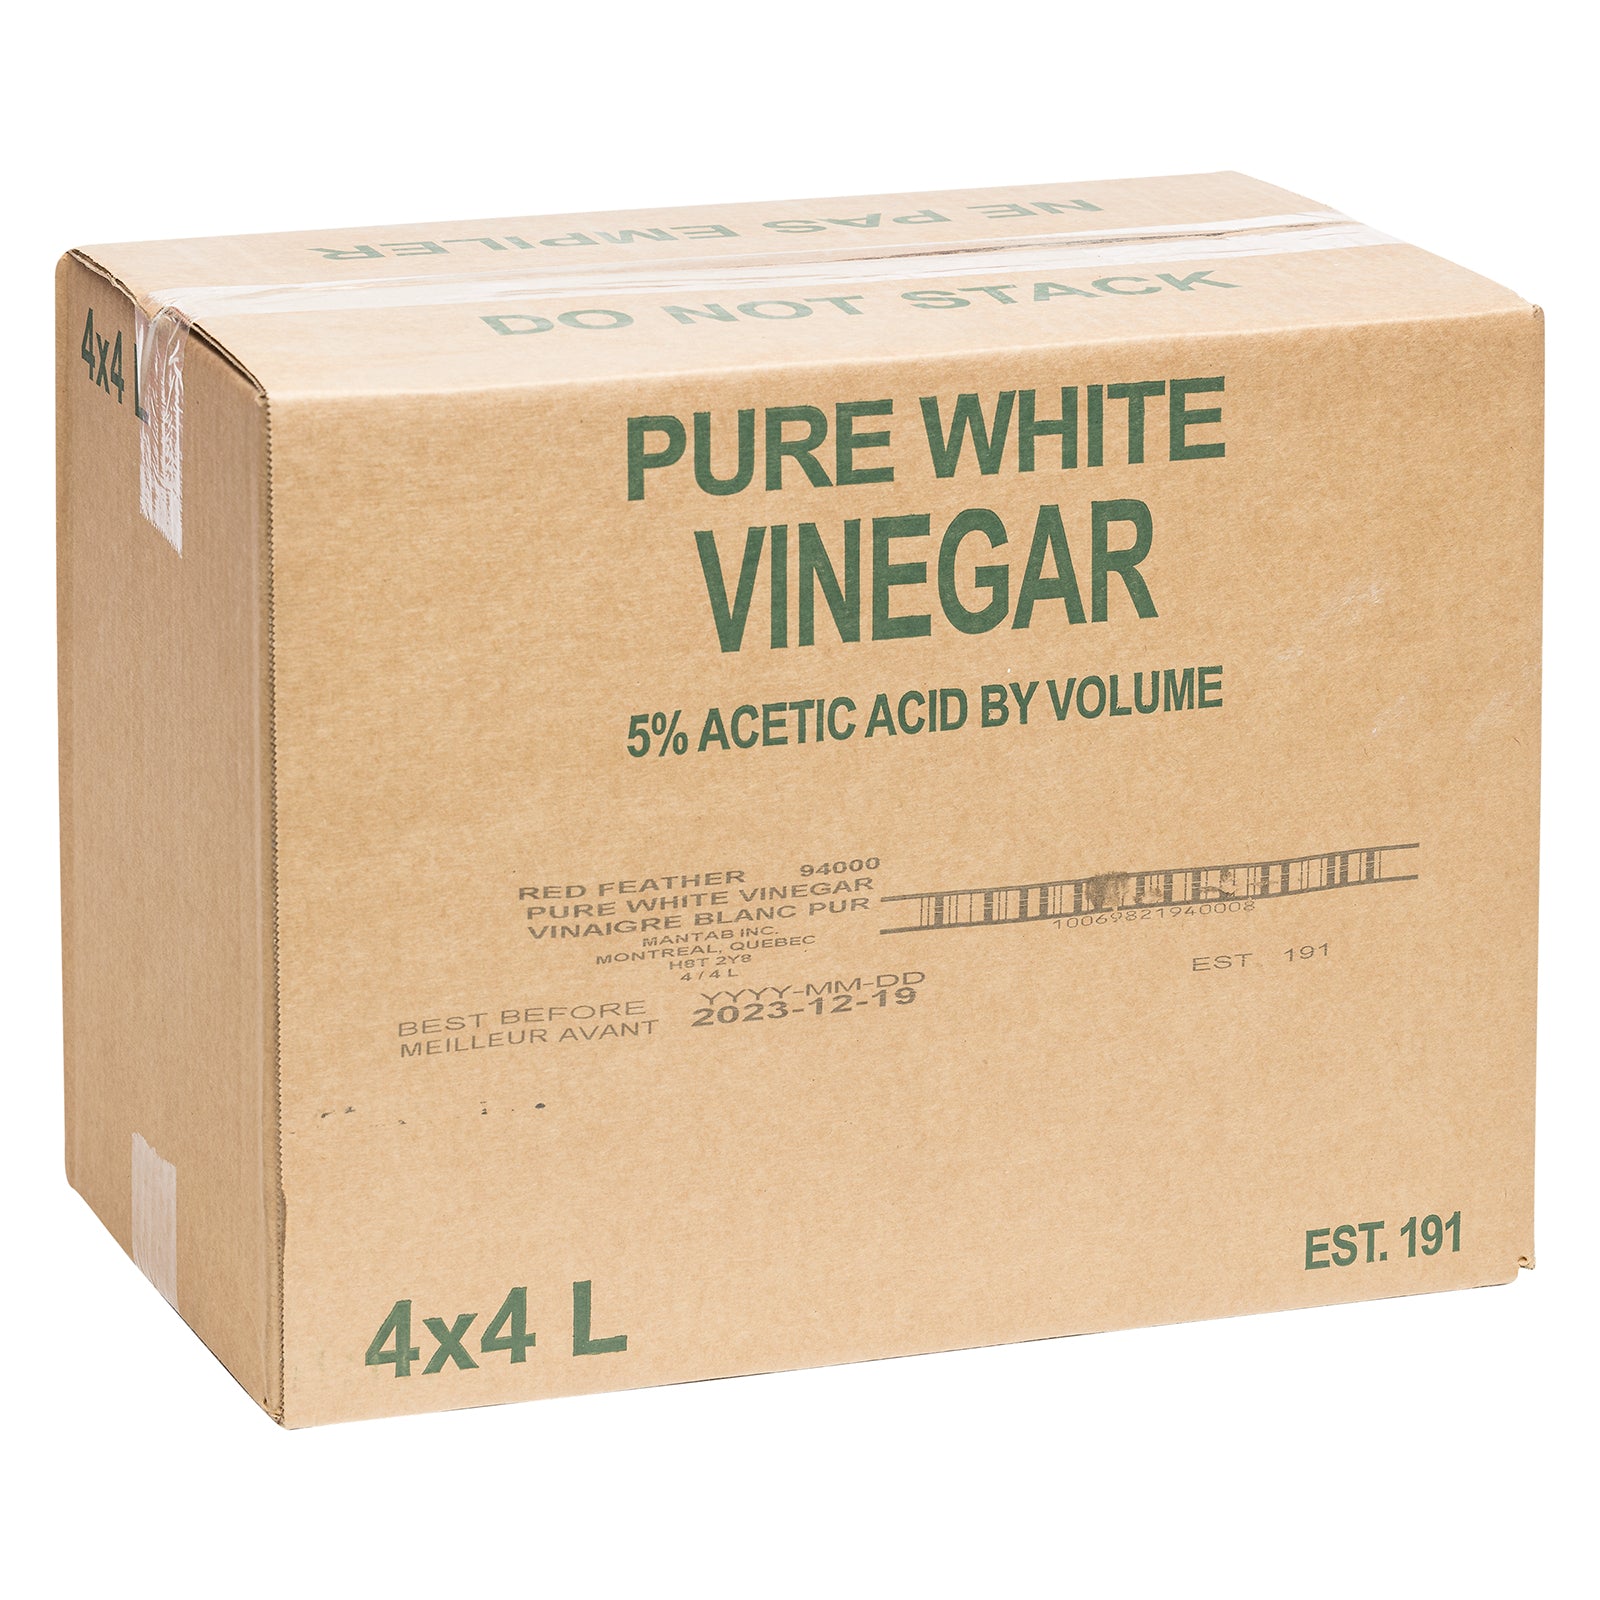 RED FEATHER White vinegar